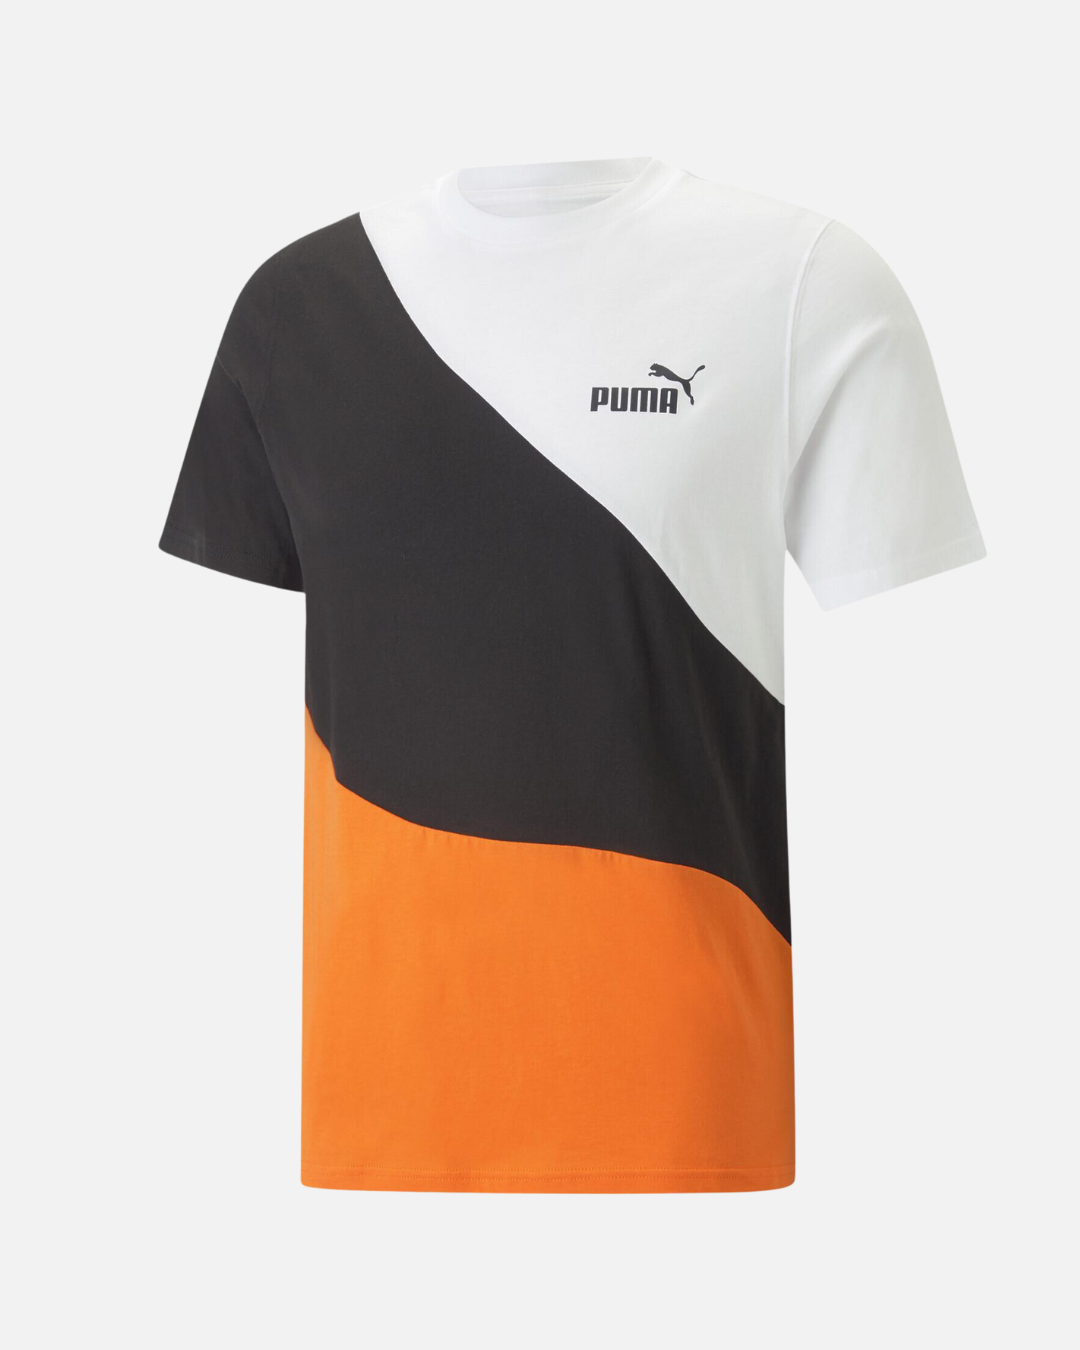 Puma Power T-shirt - Black/White/Orange